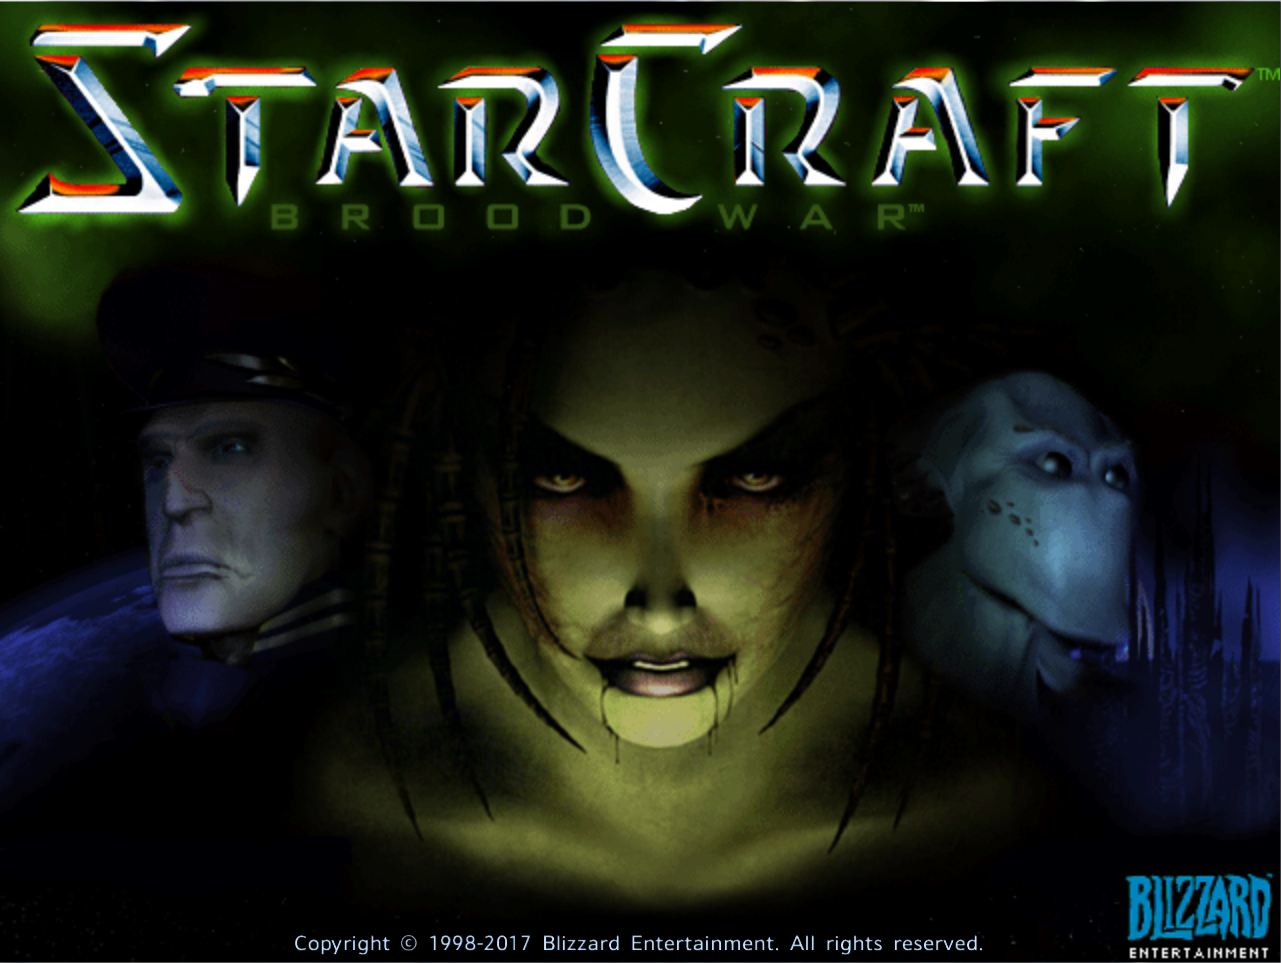 StarCraft Brood War แจกฟรีรีบรับด่วน!